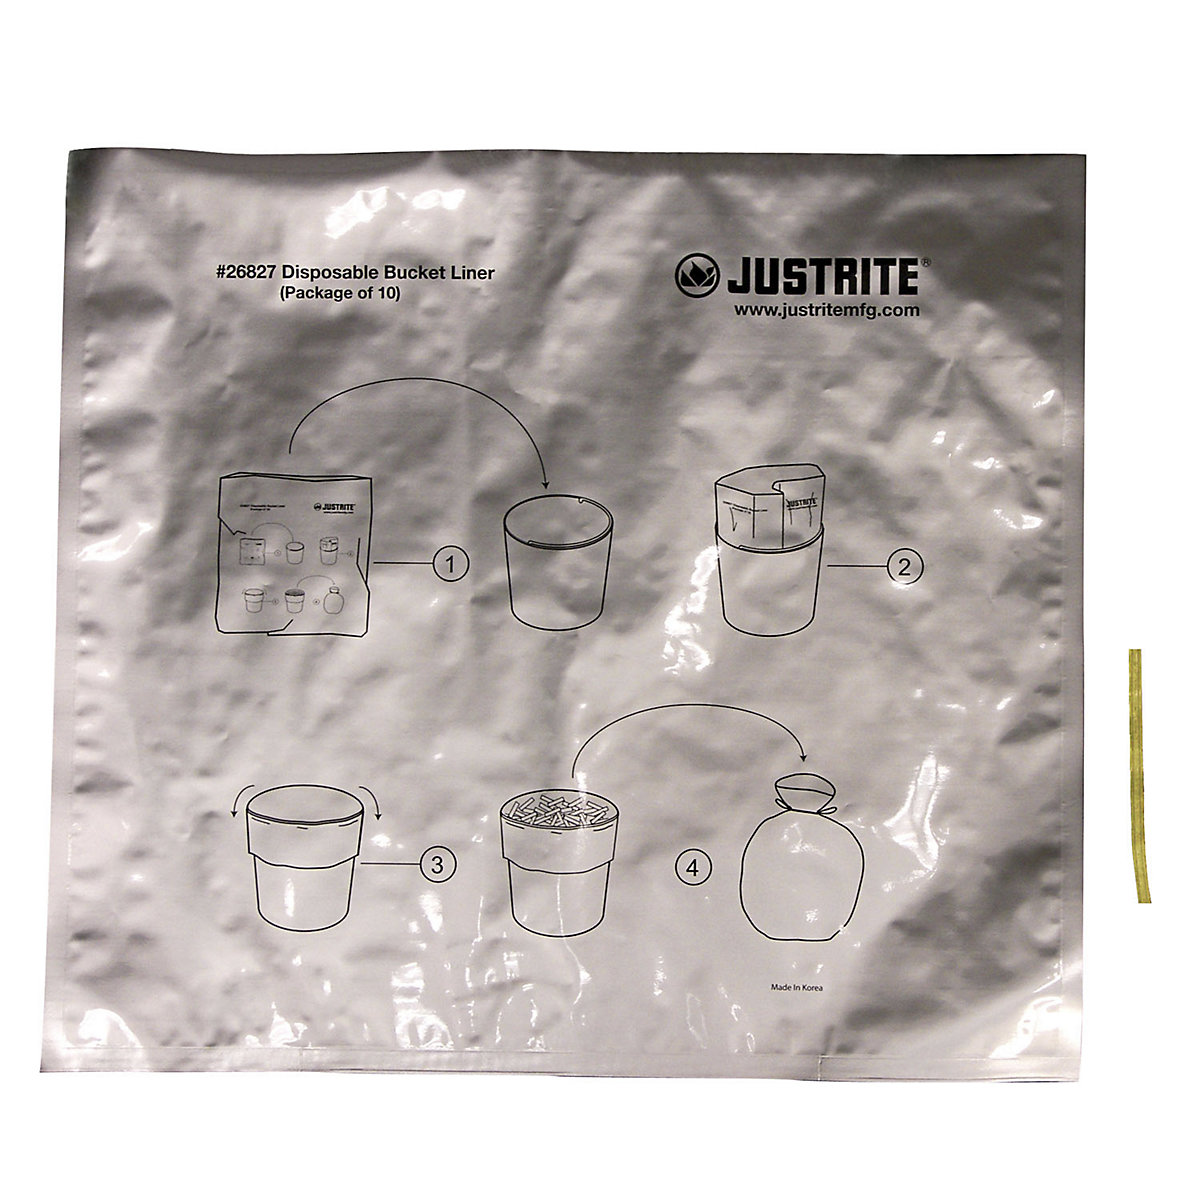 Special aluminium waste sacks for pedestal ashtrays - Justrite